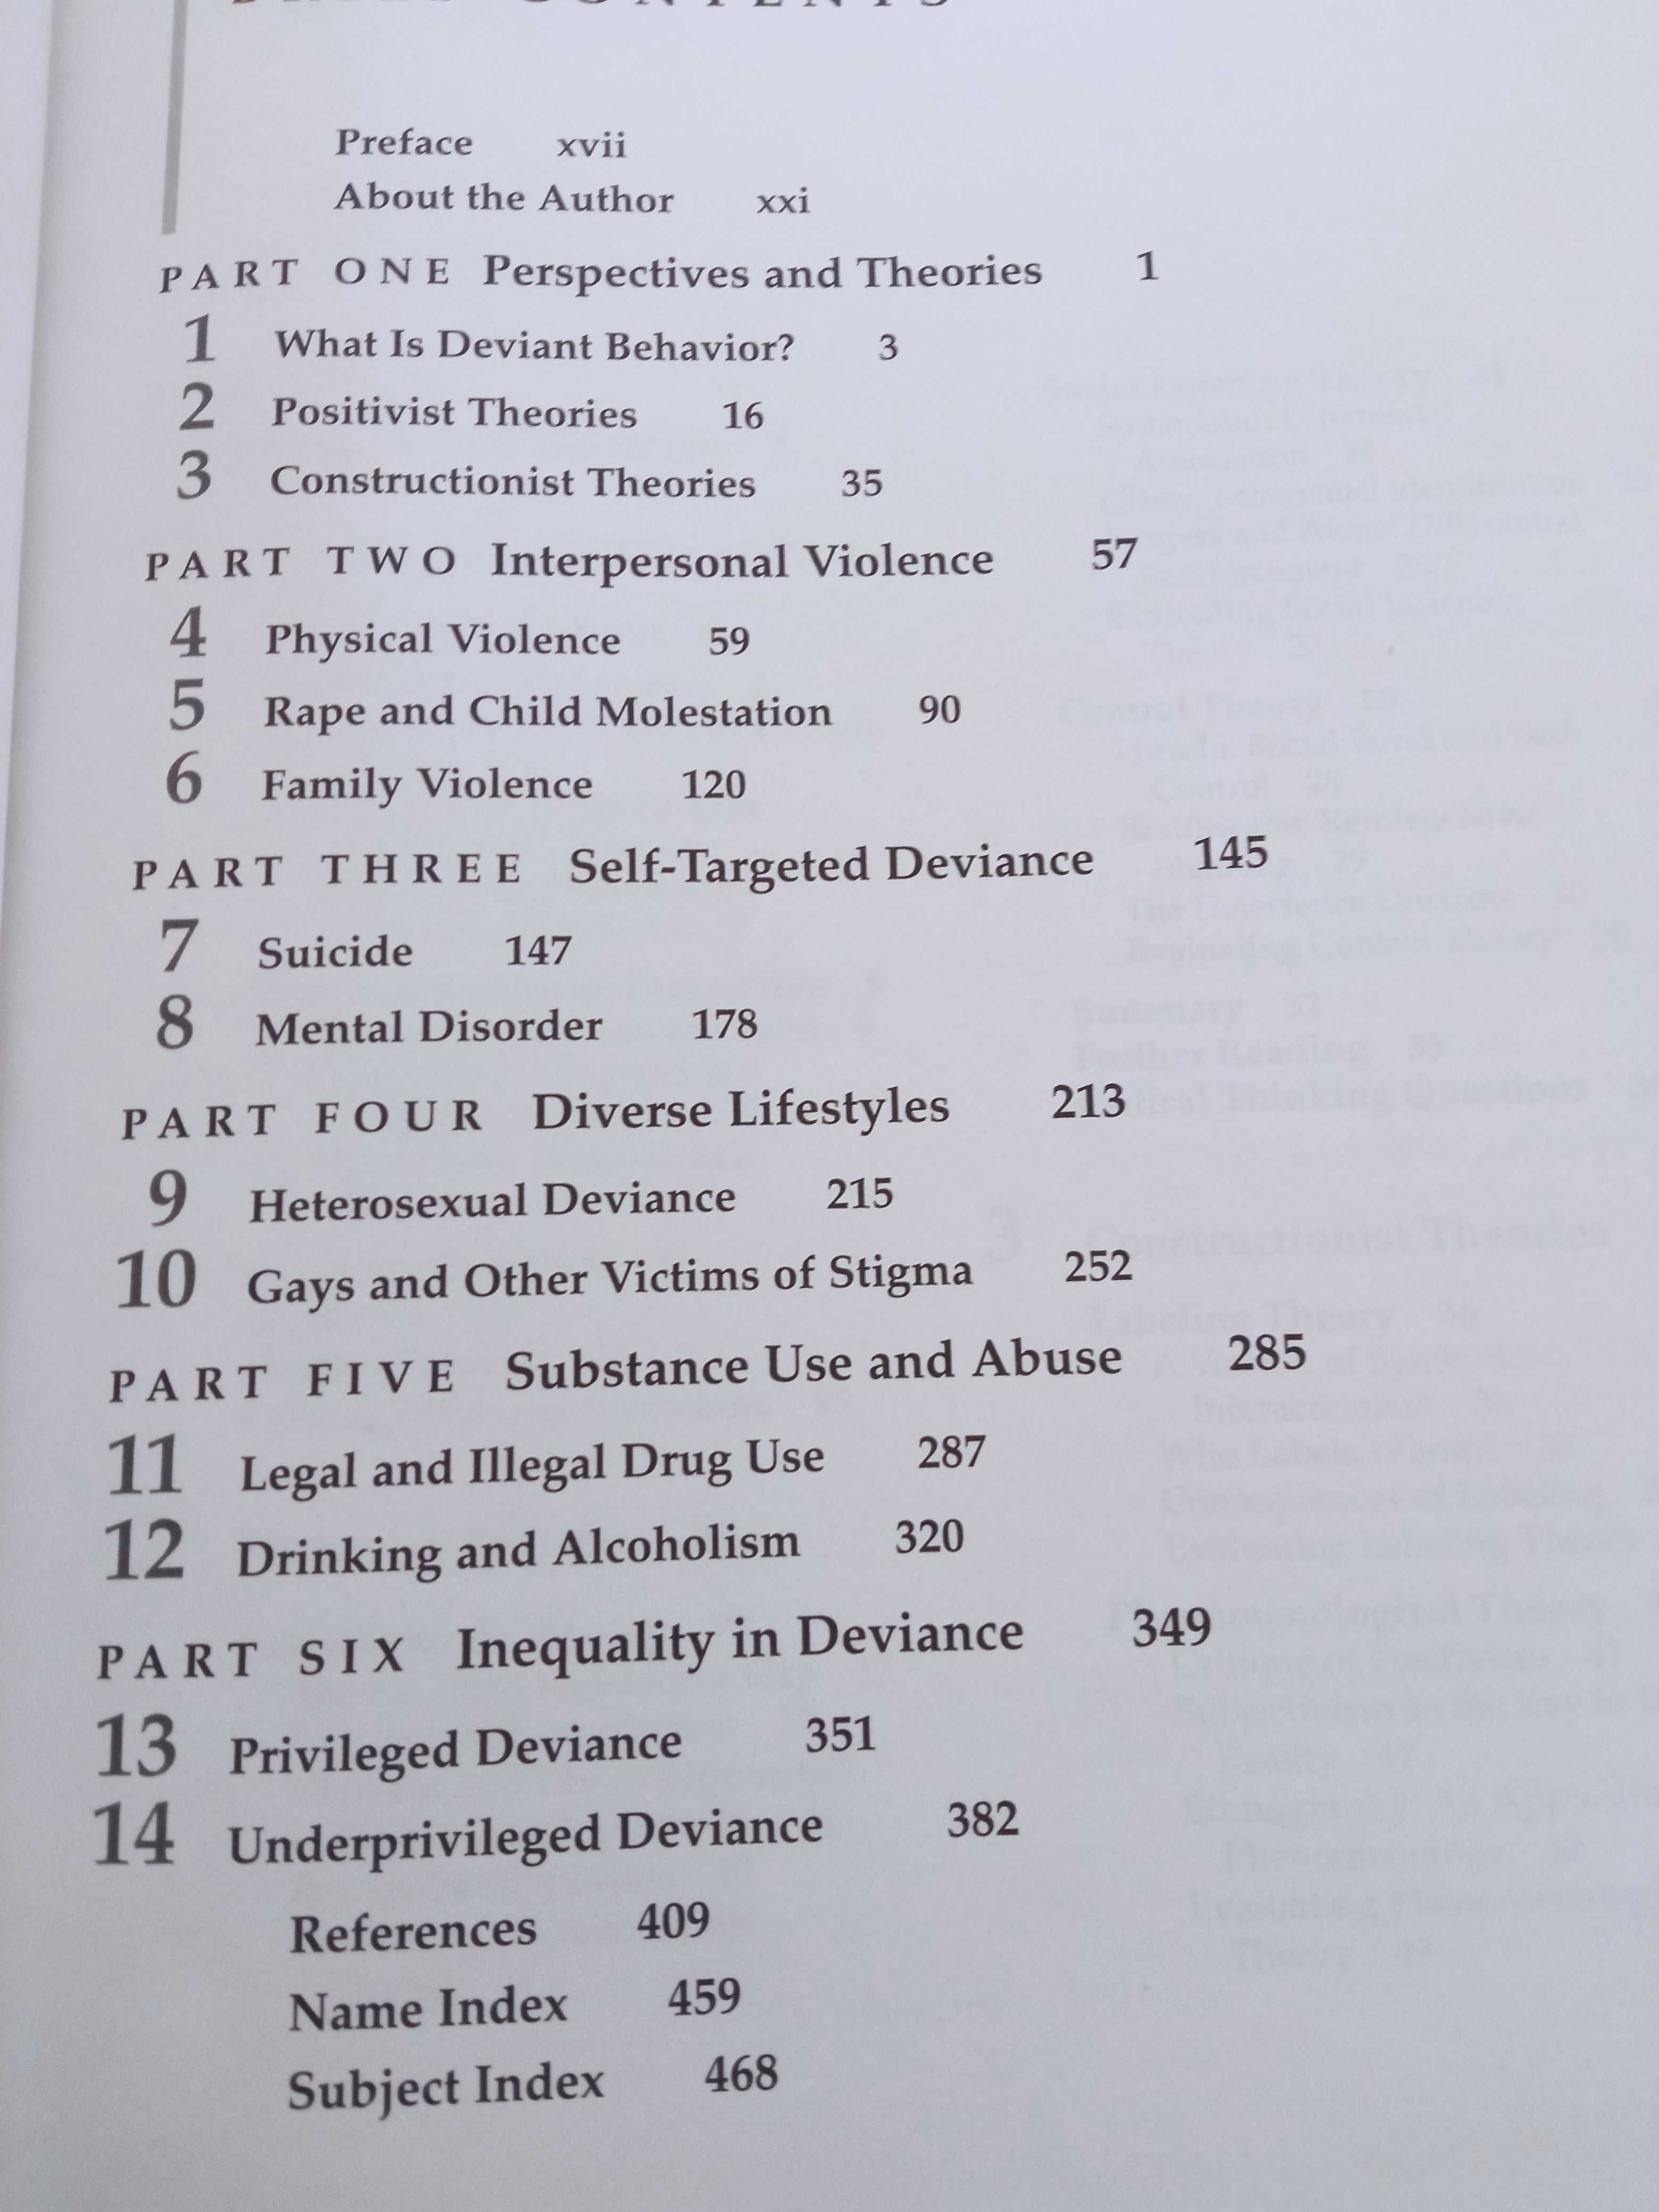 Deviant Behavior by Alex Thio - seventh edition . Wyd. Pearson.